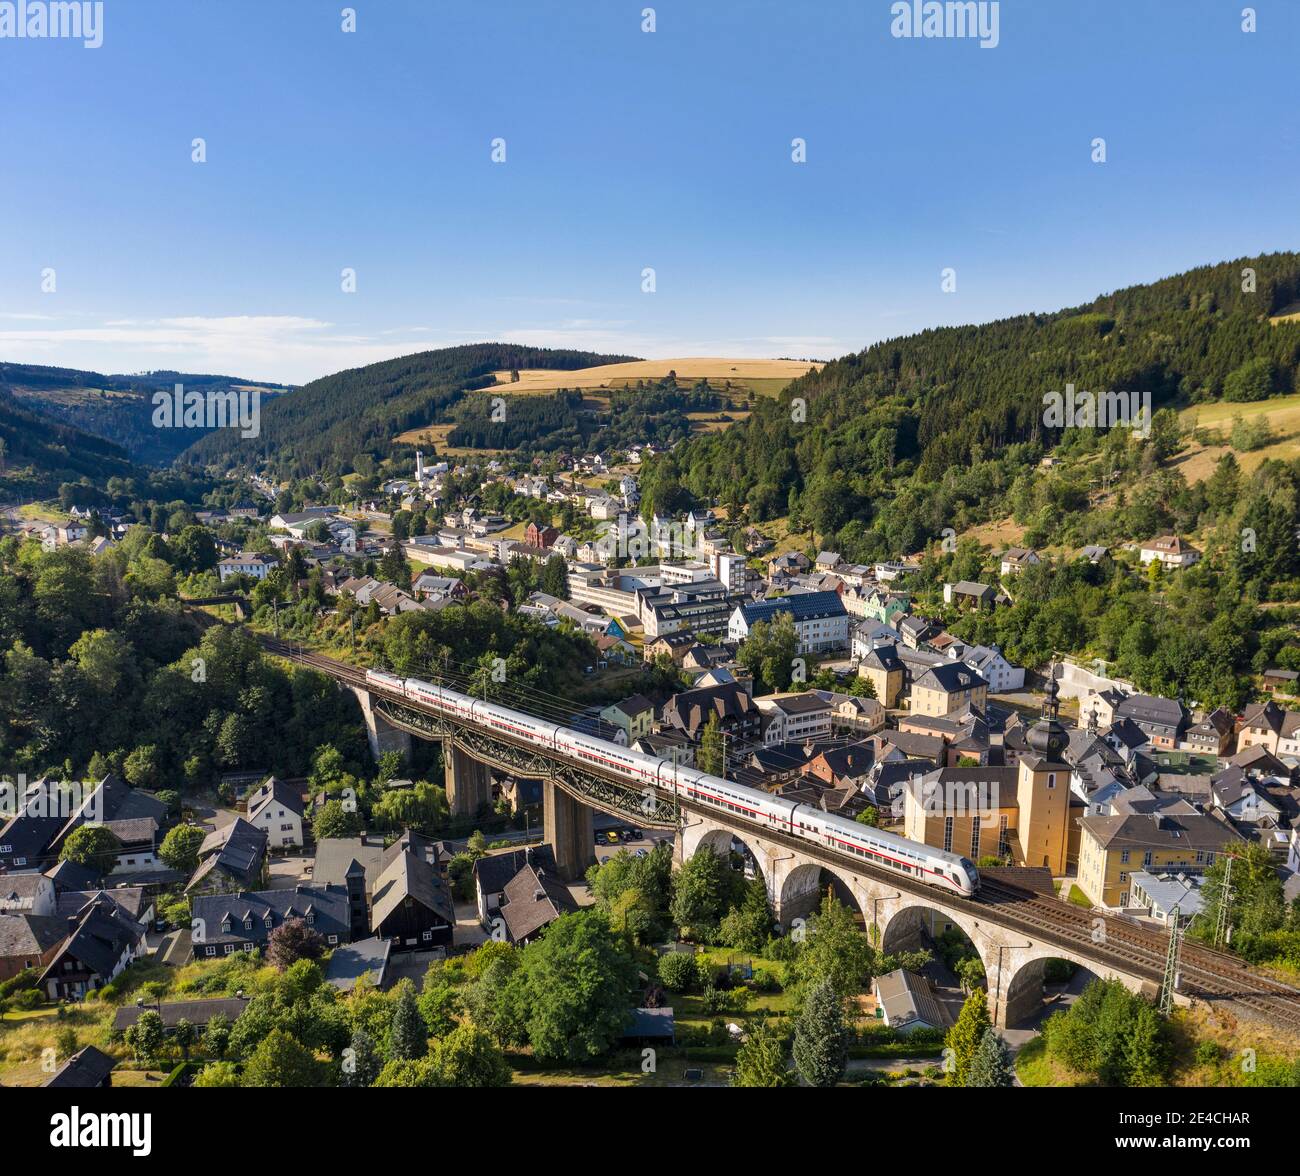 Germania, Baviera, Ludwigsstadt, treno, intercittà, ponte, città, chiesa, case, vista aerea Foto Stock